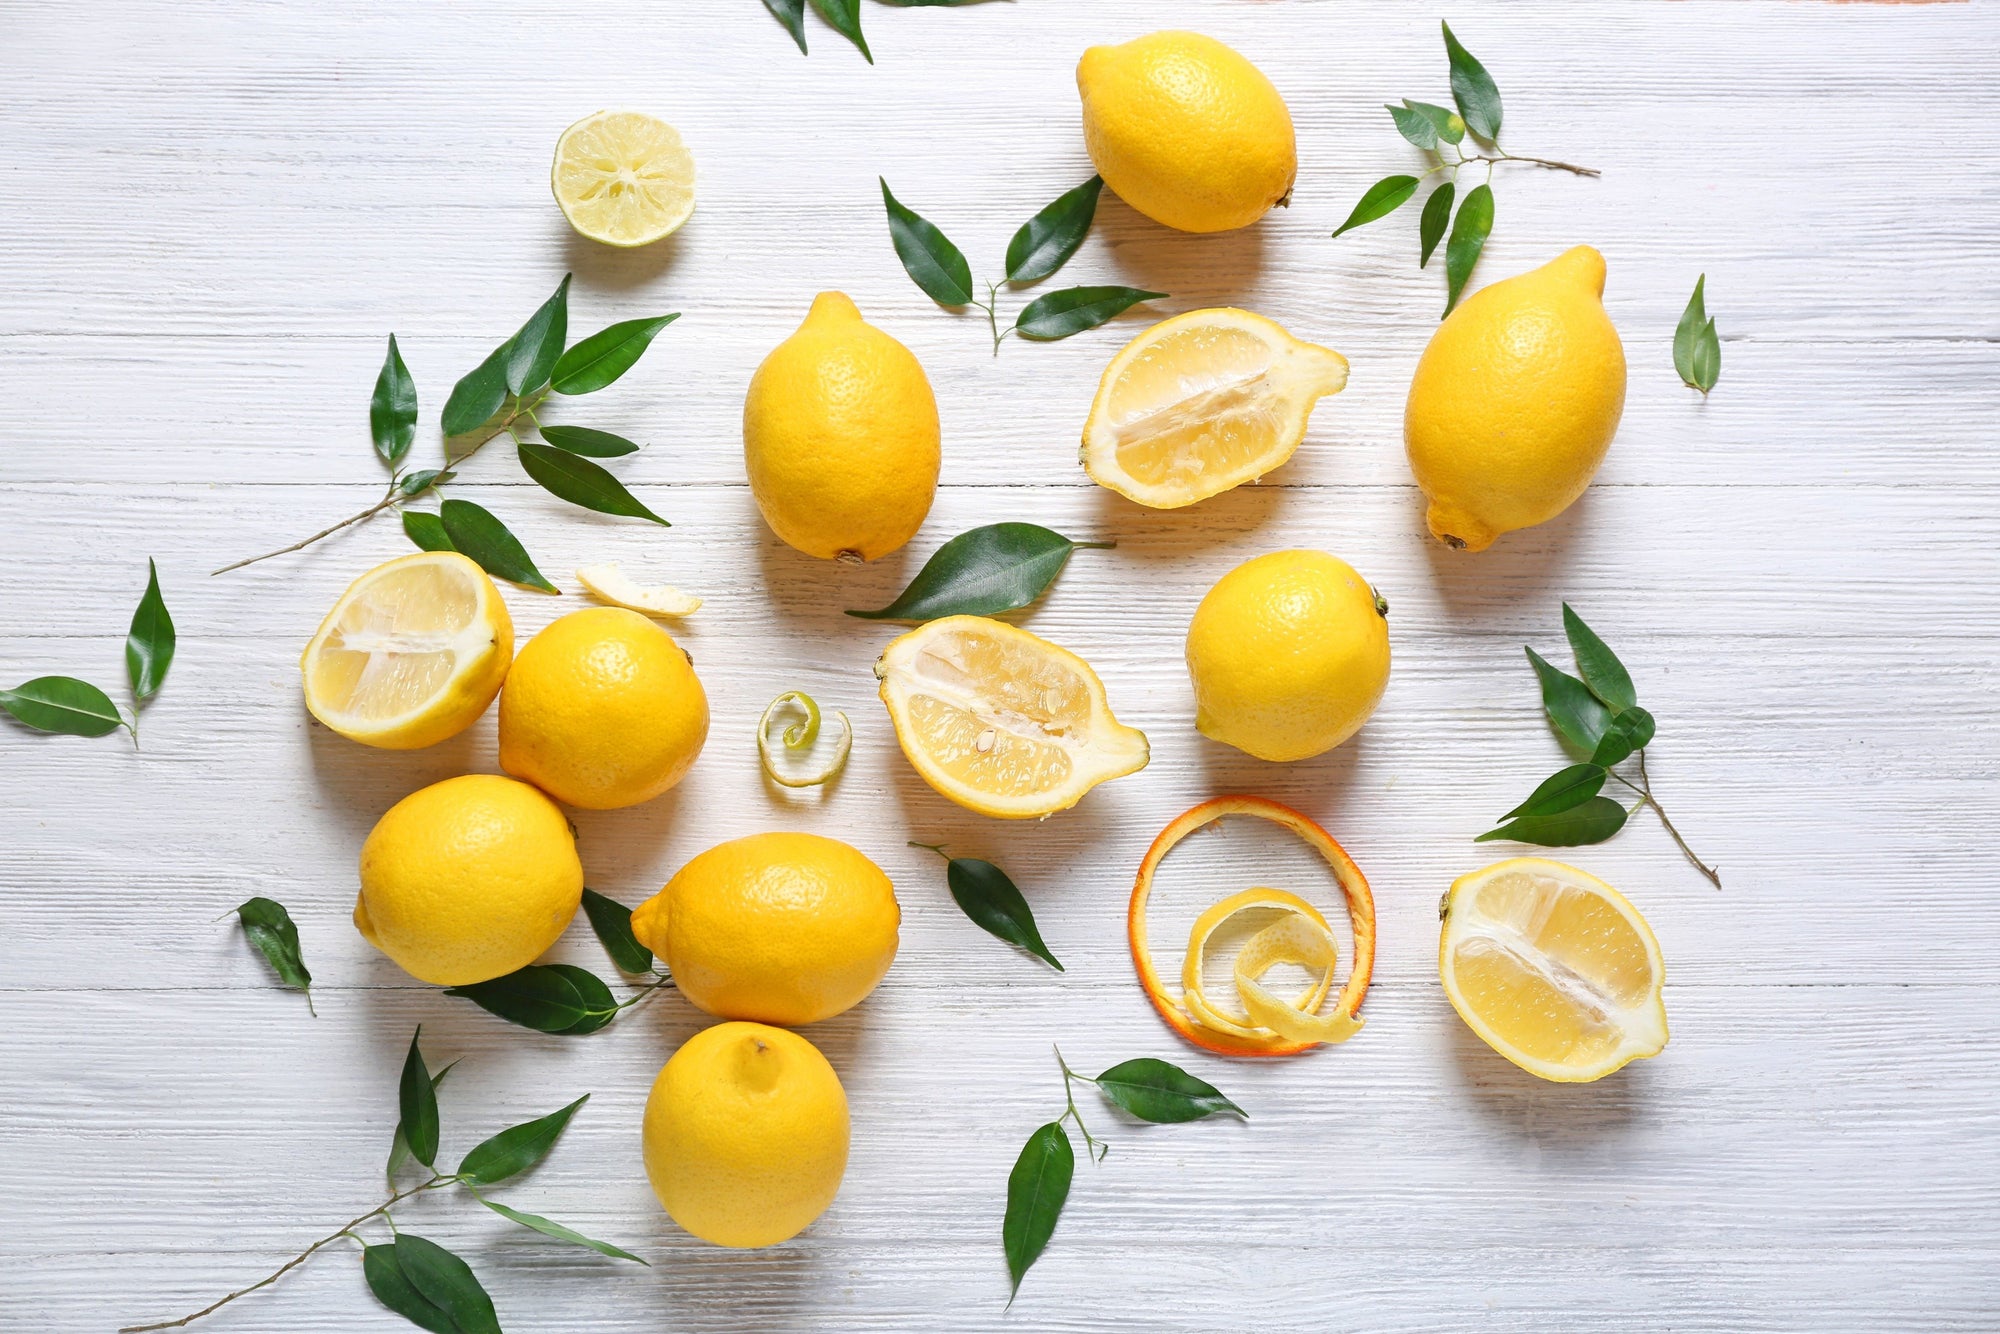 Lemon Facts: 10 Interesting Insights on the Citrus Fruit